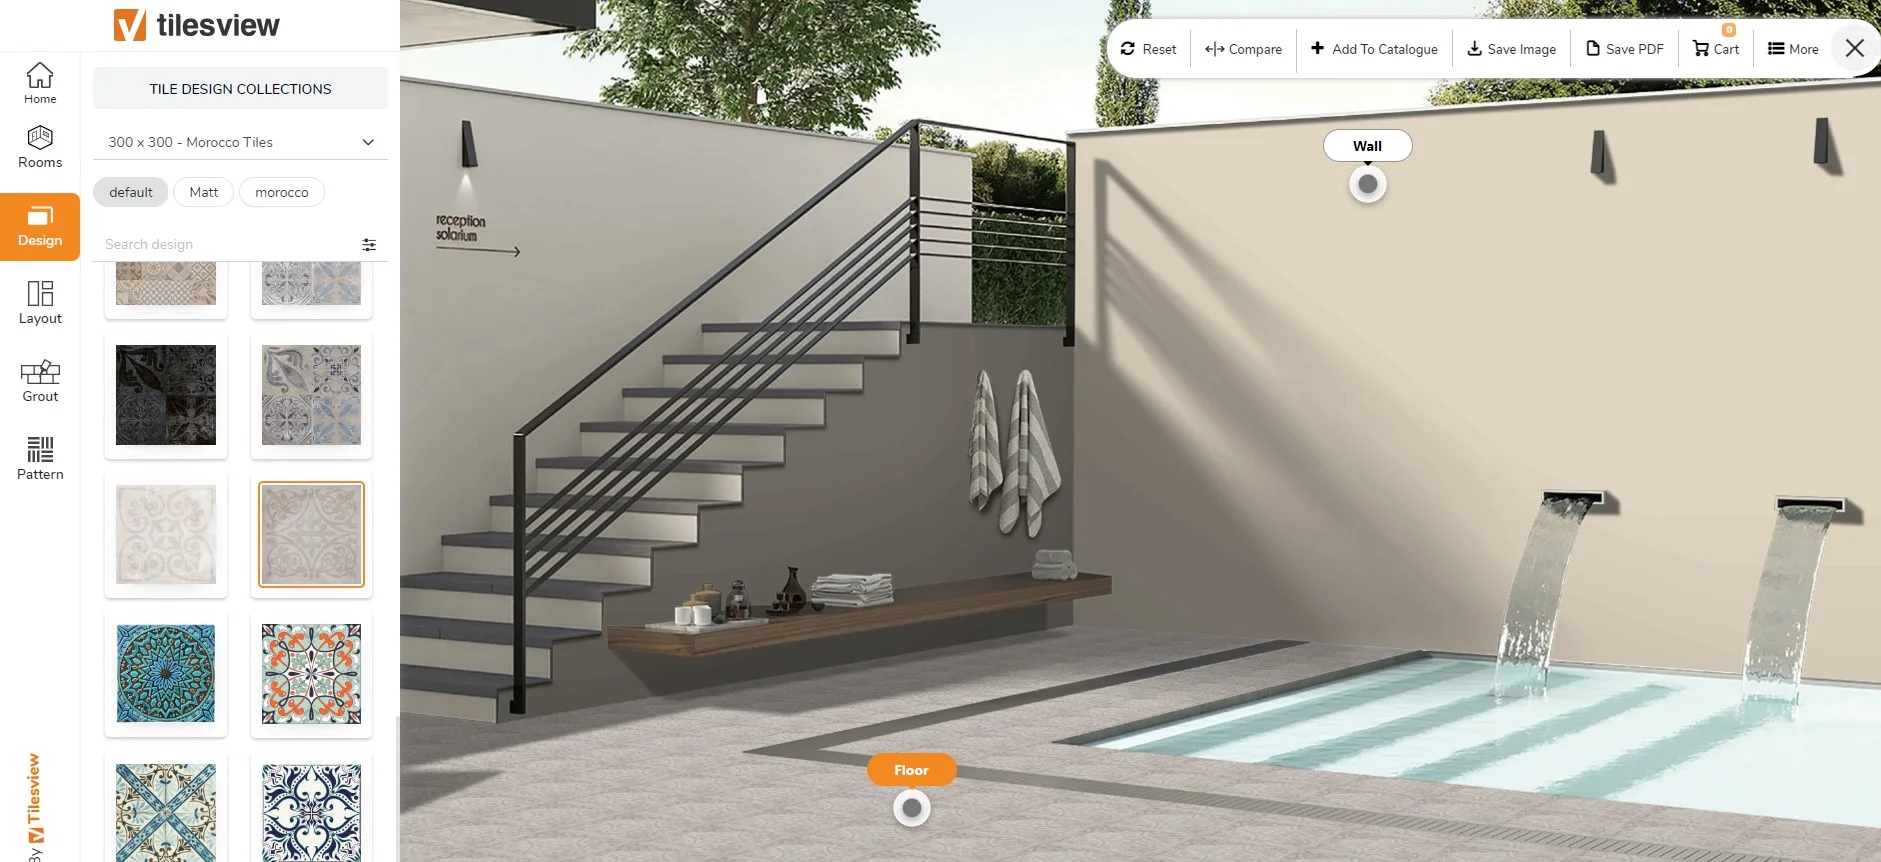 Best App to Visualize Outdoor Tiles Online